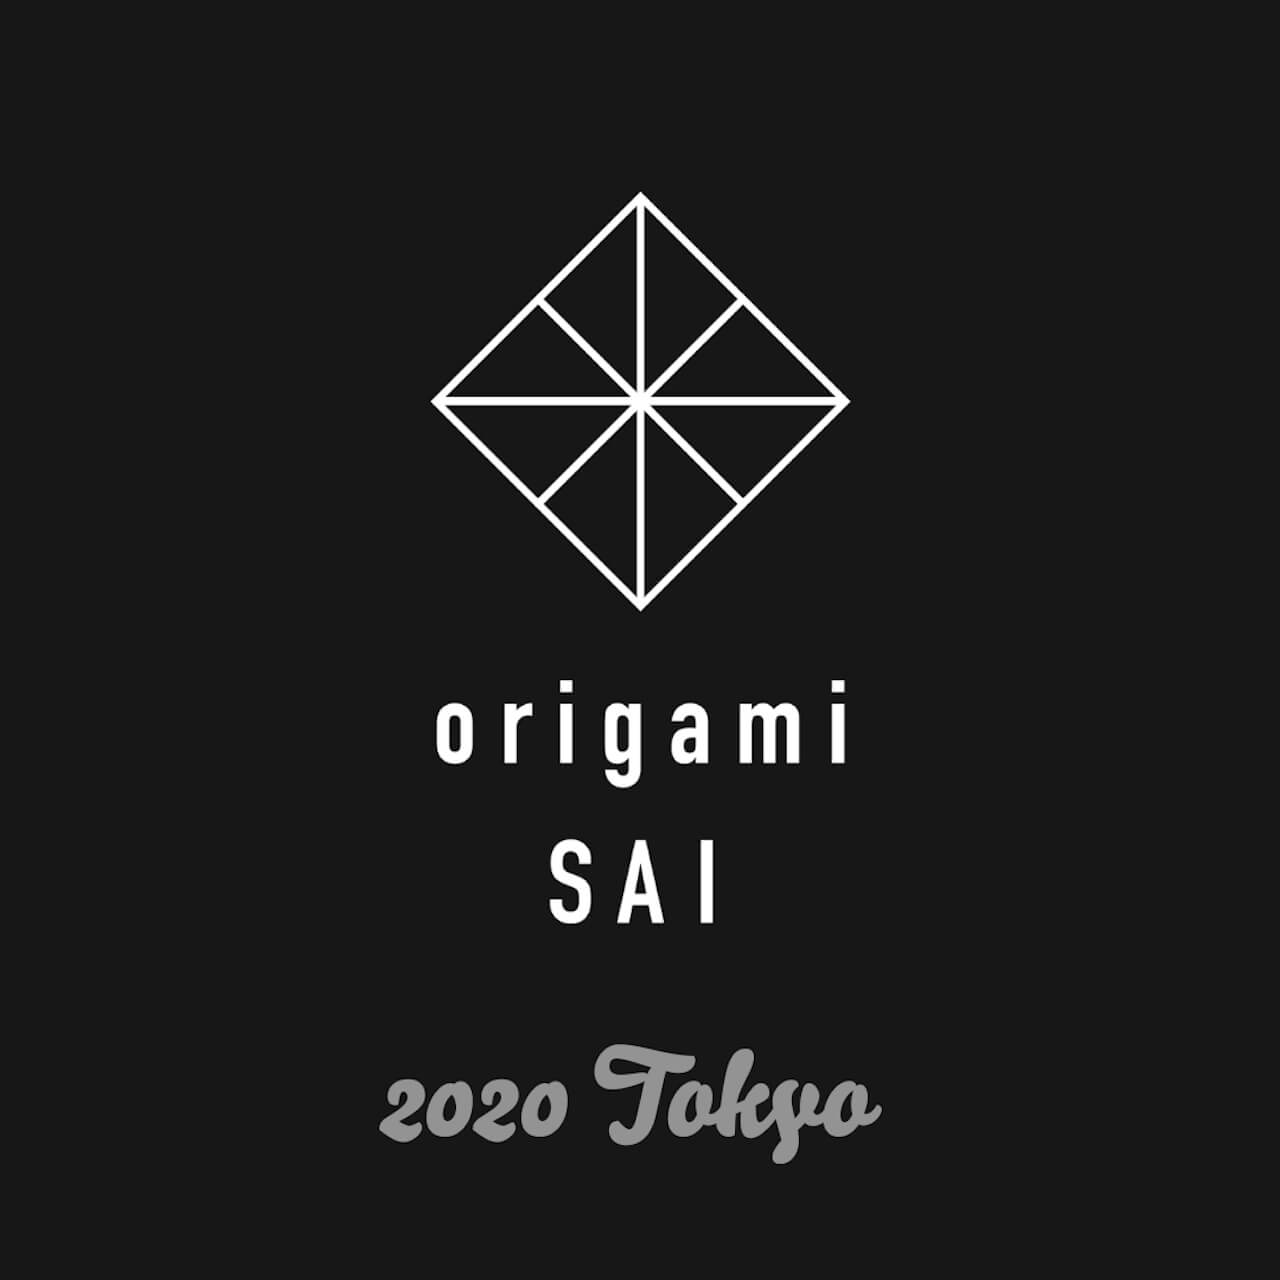 origami座談会｜mabanua、Ovall、Kan Sano、Michael Kanekoら所属「origami PRODUCTIONS」の2019年を振り返る interview20191213-origami-production-3